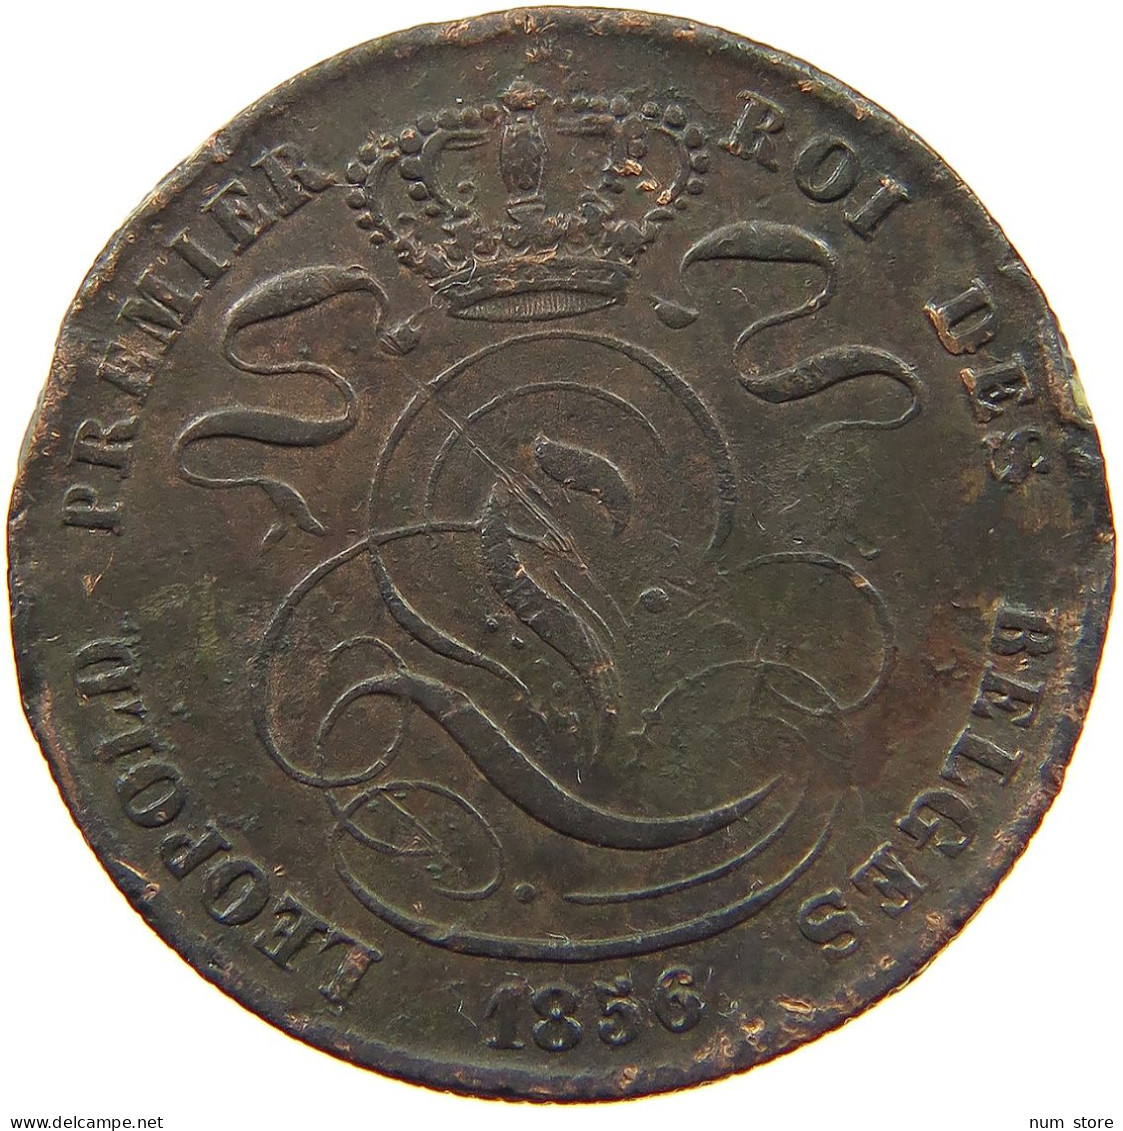 BELGIUM 5 CENTIMES 1856 Leopold I. (1831-1865) #a007 0321 - 5 Centimes